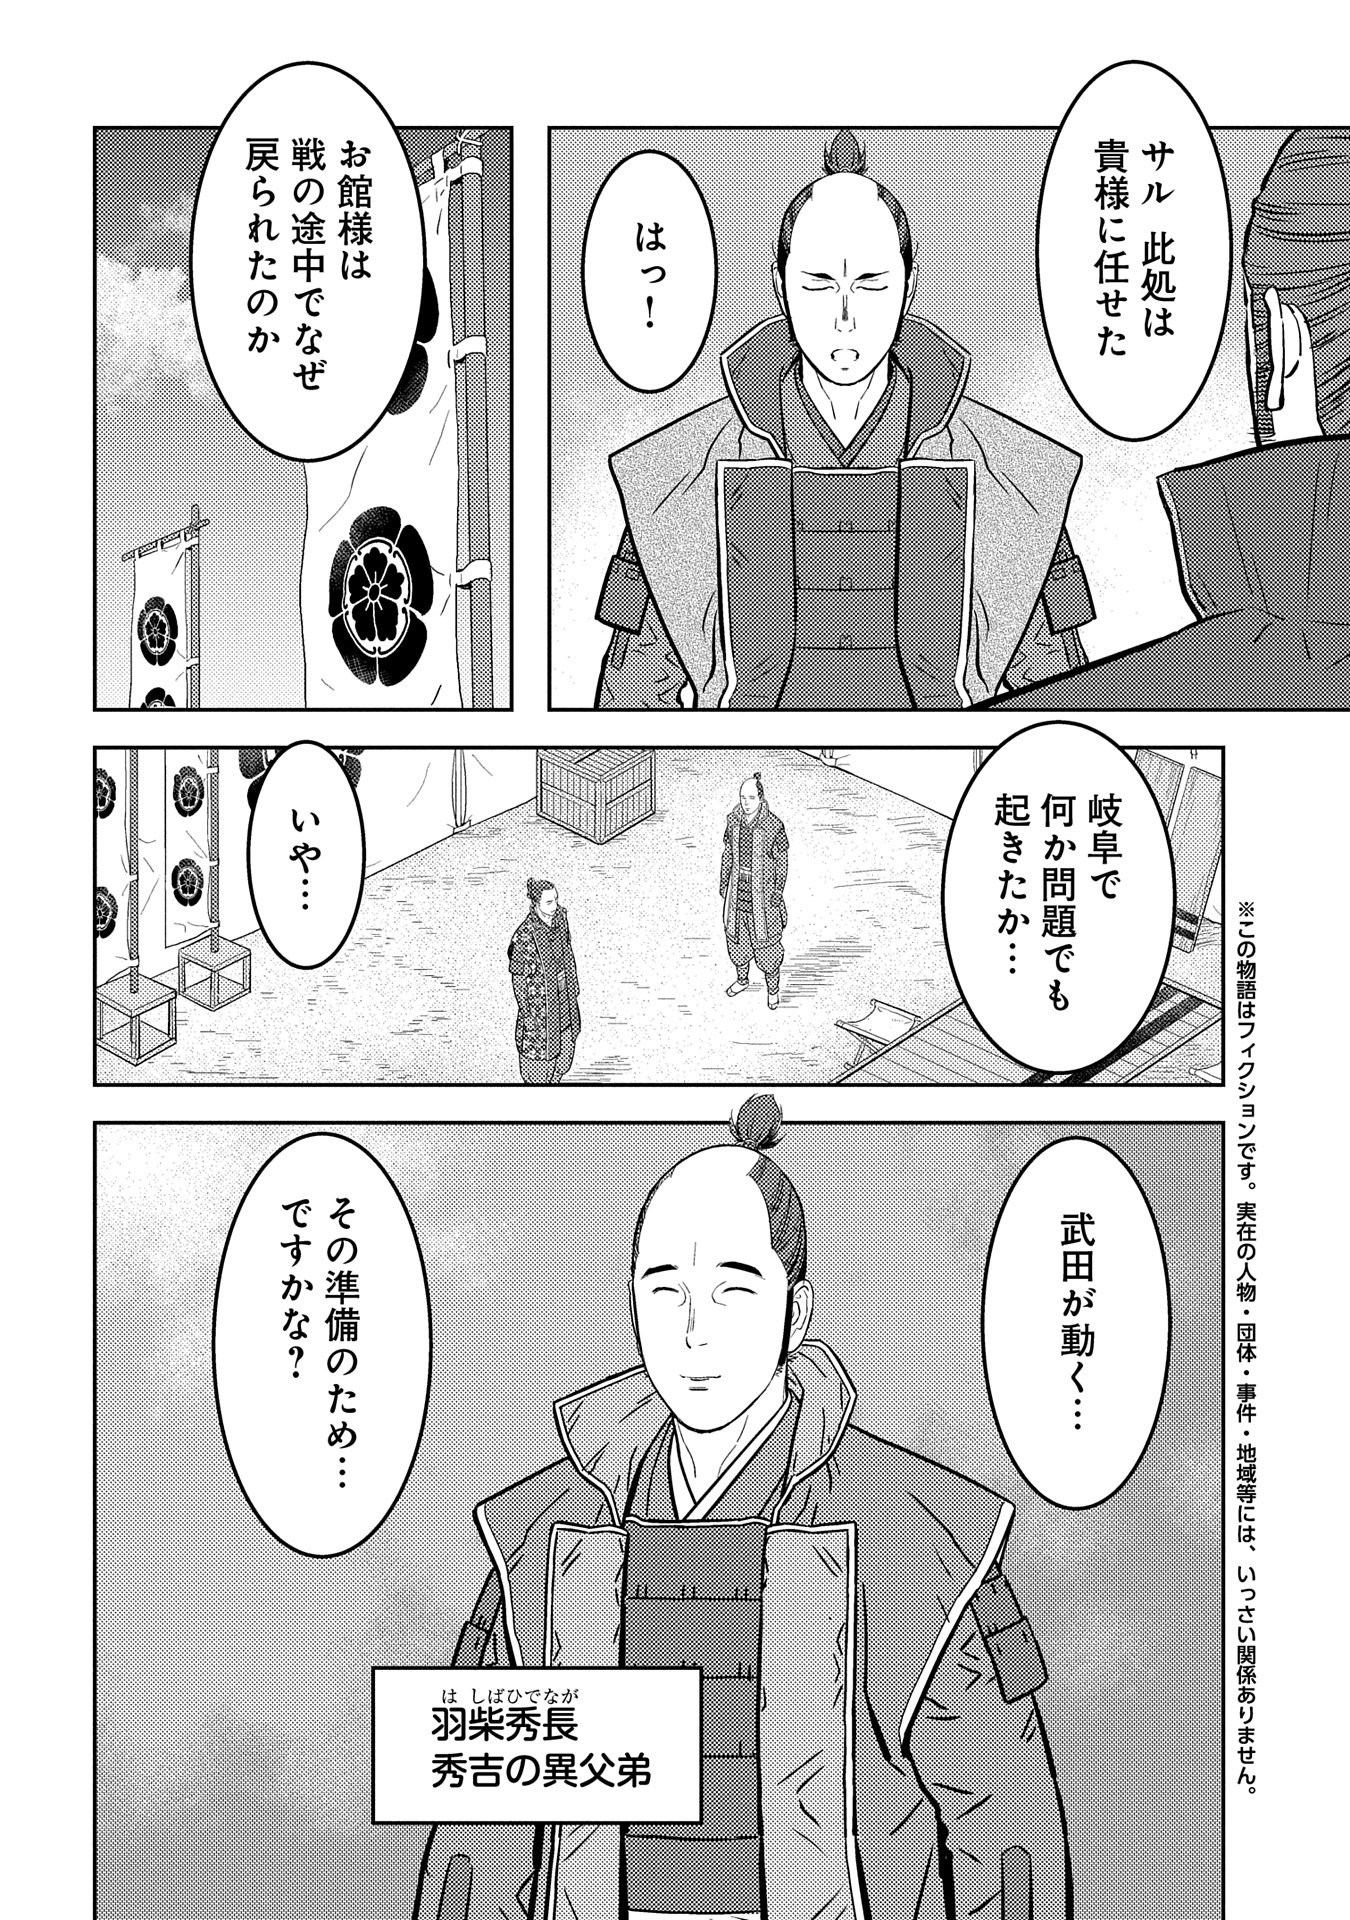 Sengoku Komachi Kuroutan - Chapter 77 - Page 2